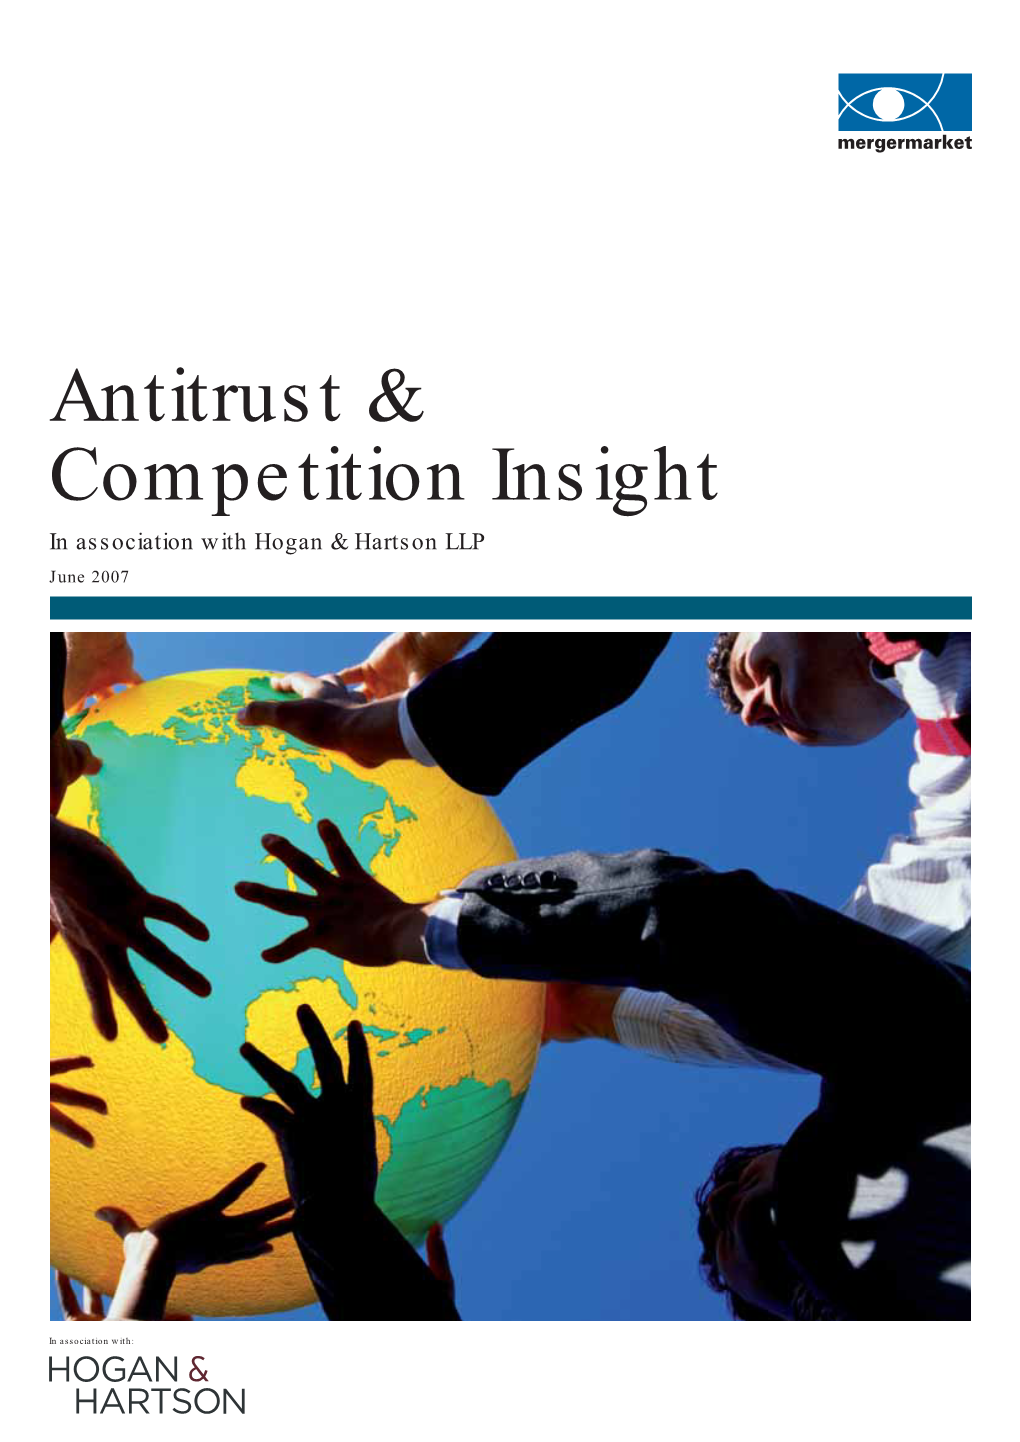 Antitrust & Competition Insight